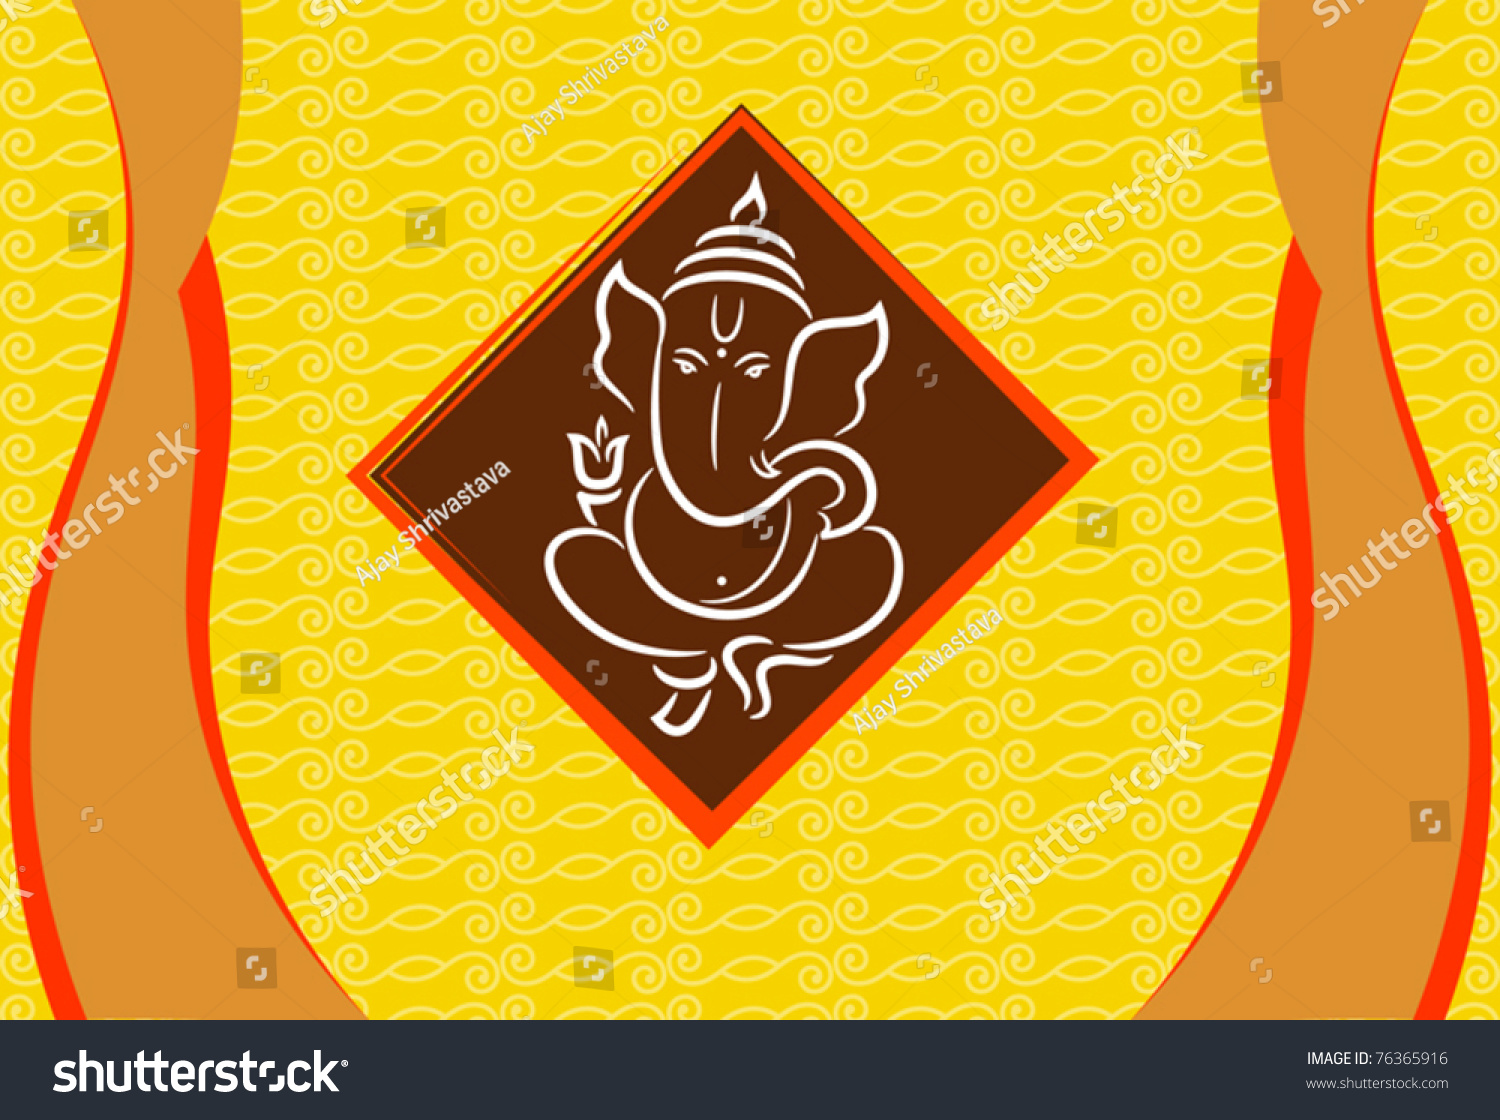 Ganesha Wedding Card Stock Vector Illustration 76365916 : Shutterstock